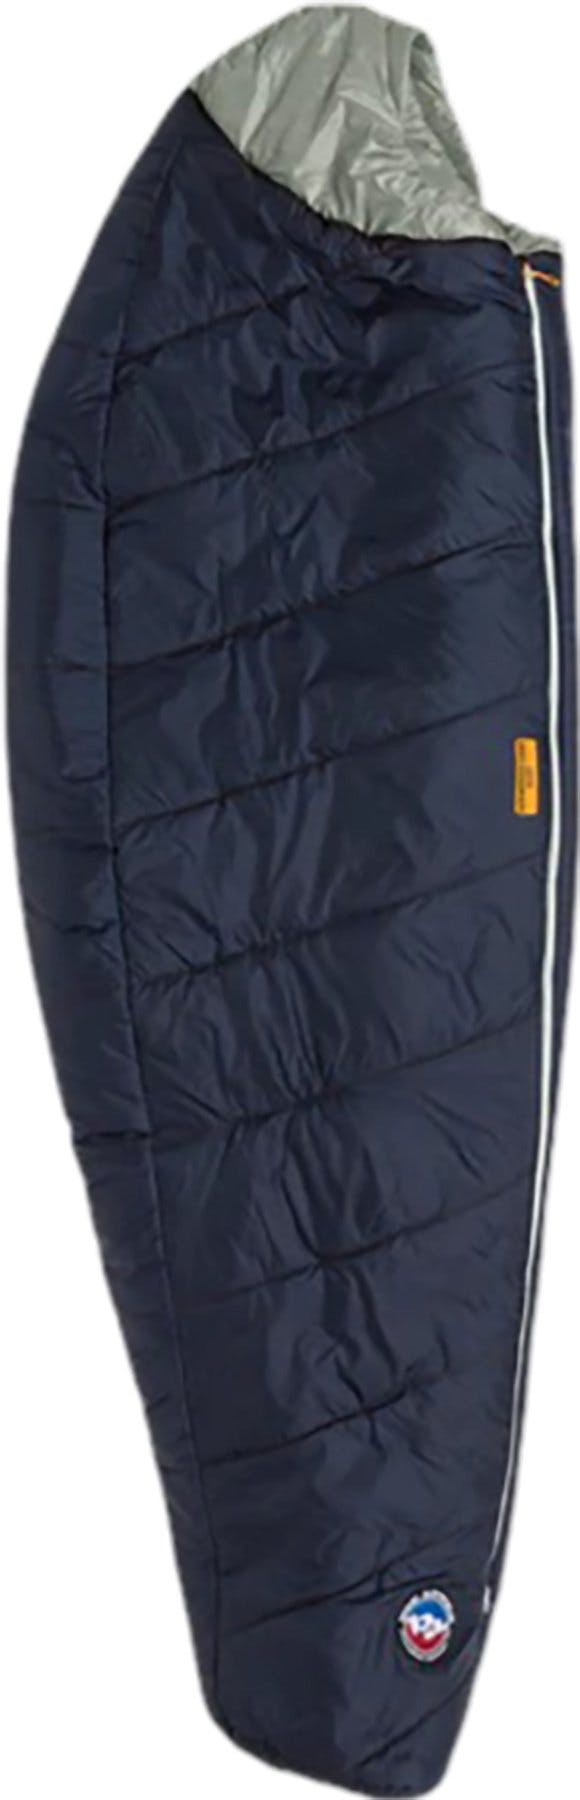 Product image for Sidewinder Camp 35°F/1°C Mummy Sleeping Bag - Regular